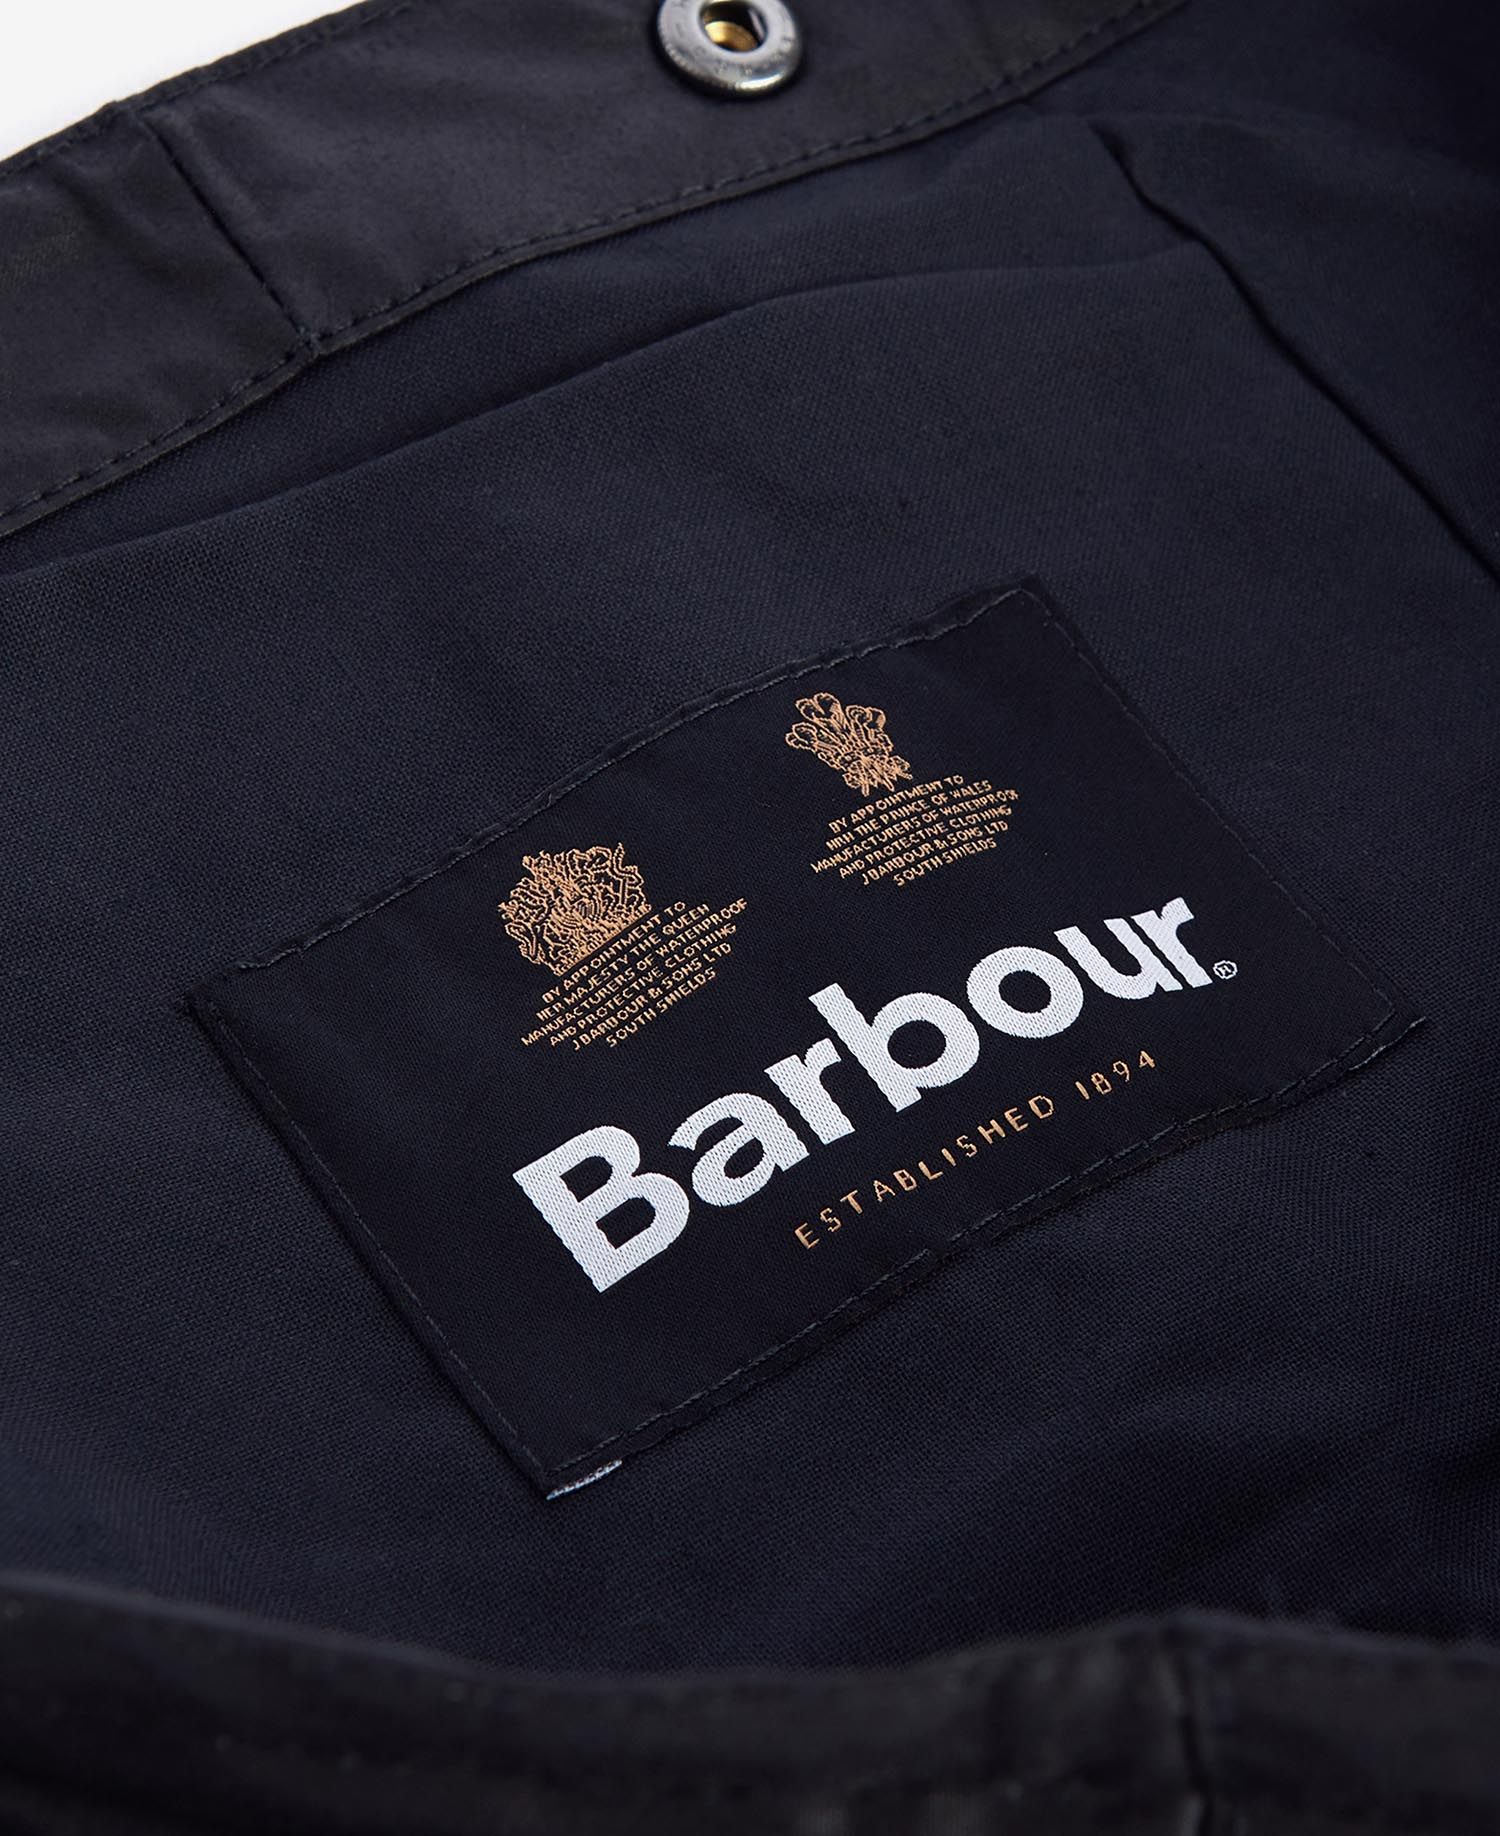 Barbour Waxed Cotton Plain Hood in Black | Barbour